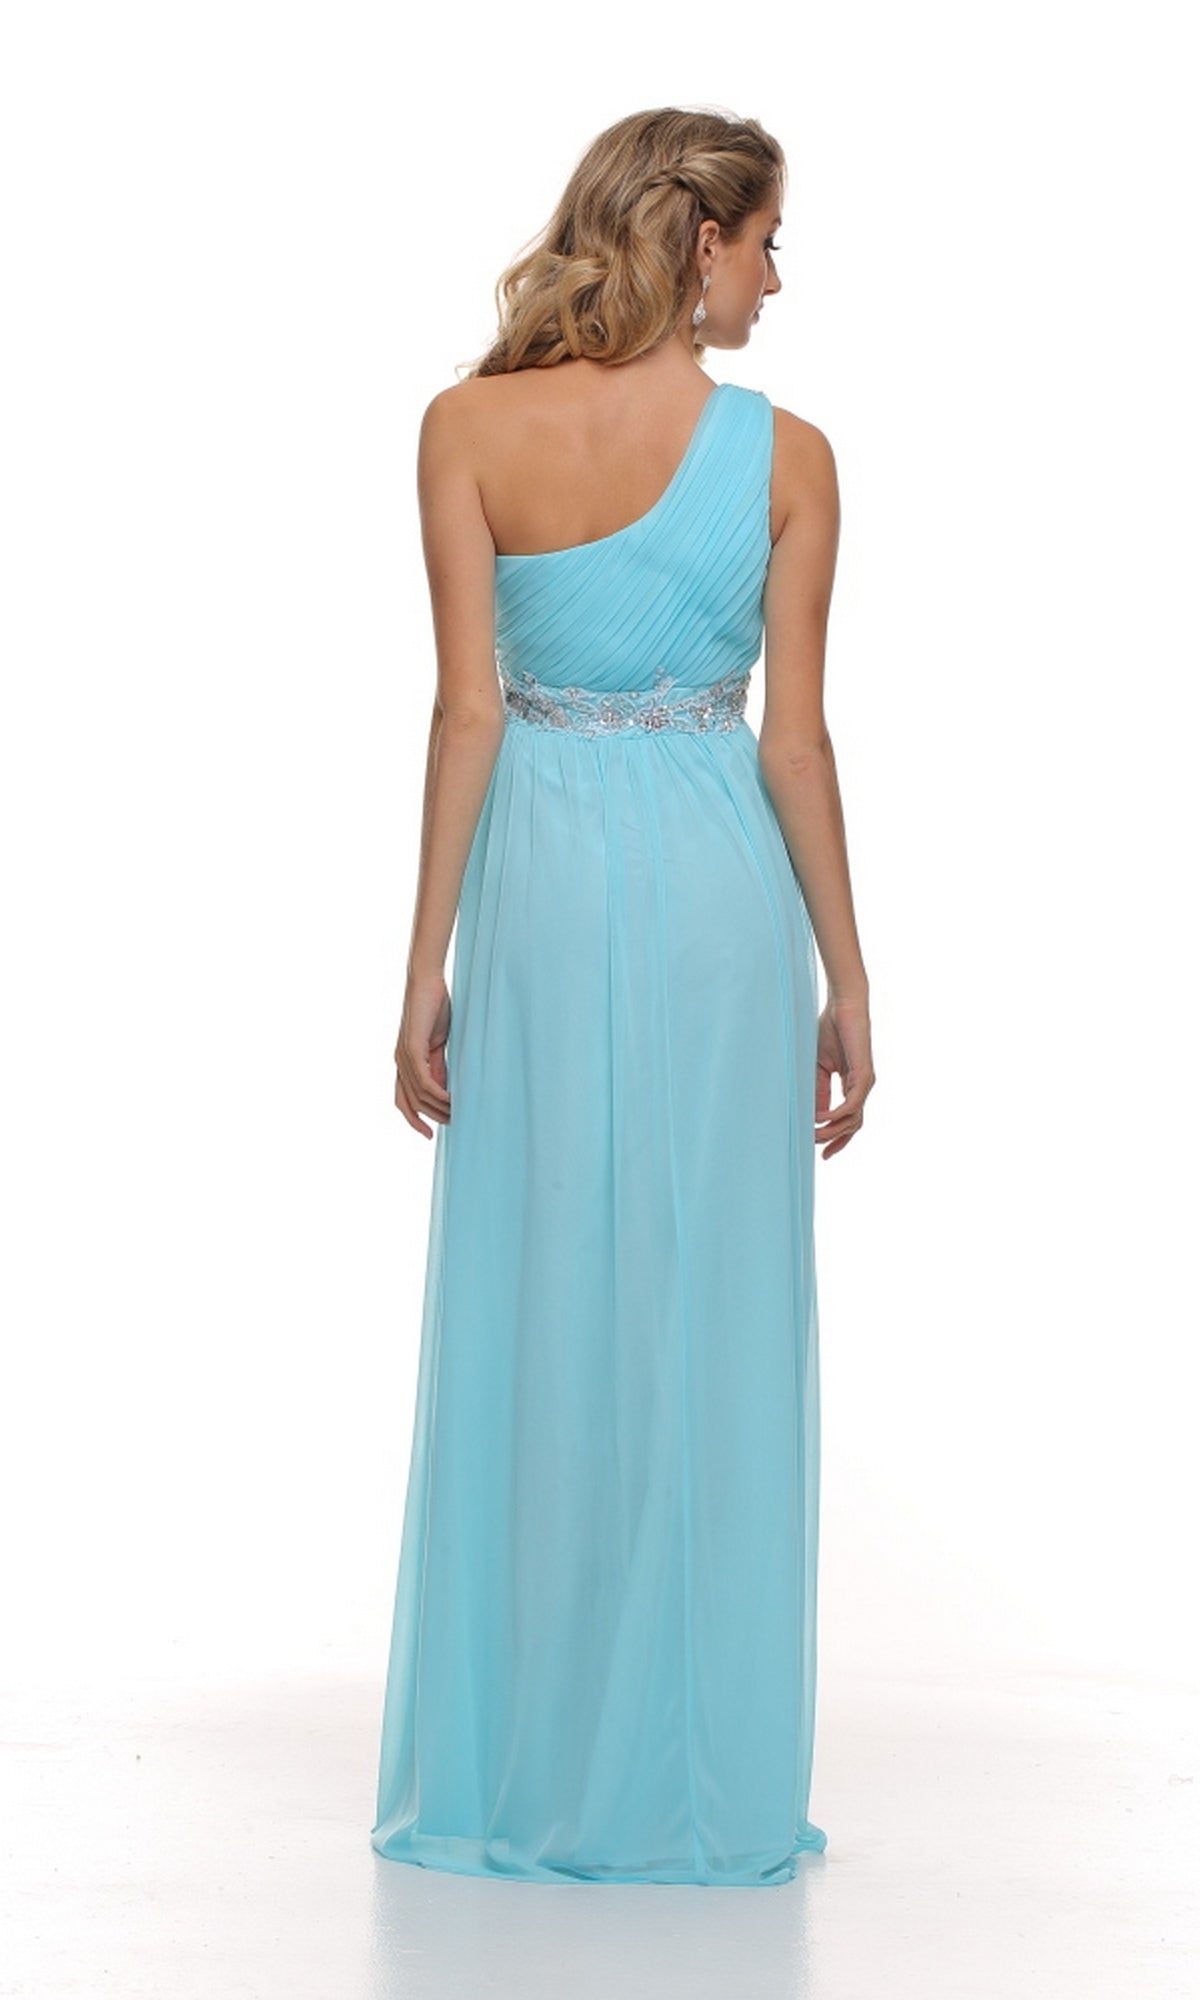  One-Shoulder Grecian-Inspired Long Formal Dress